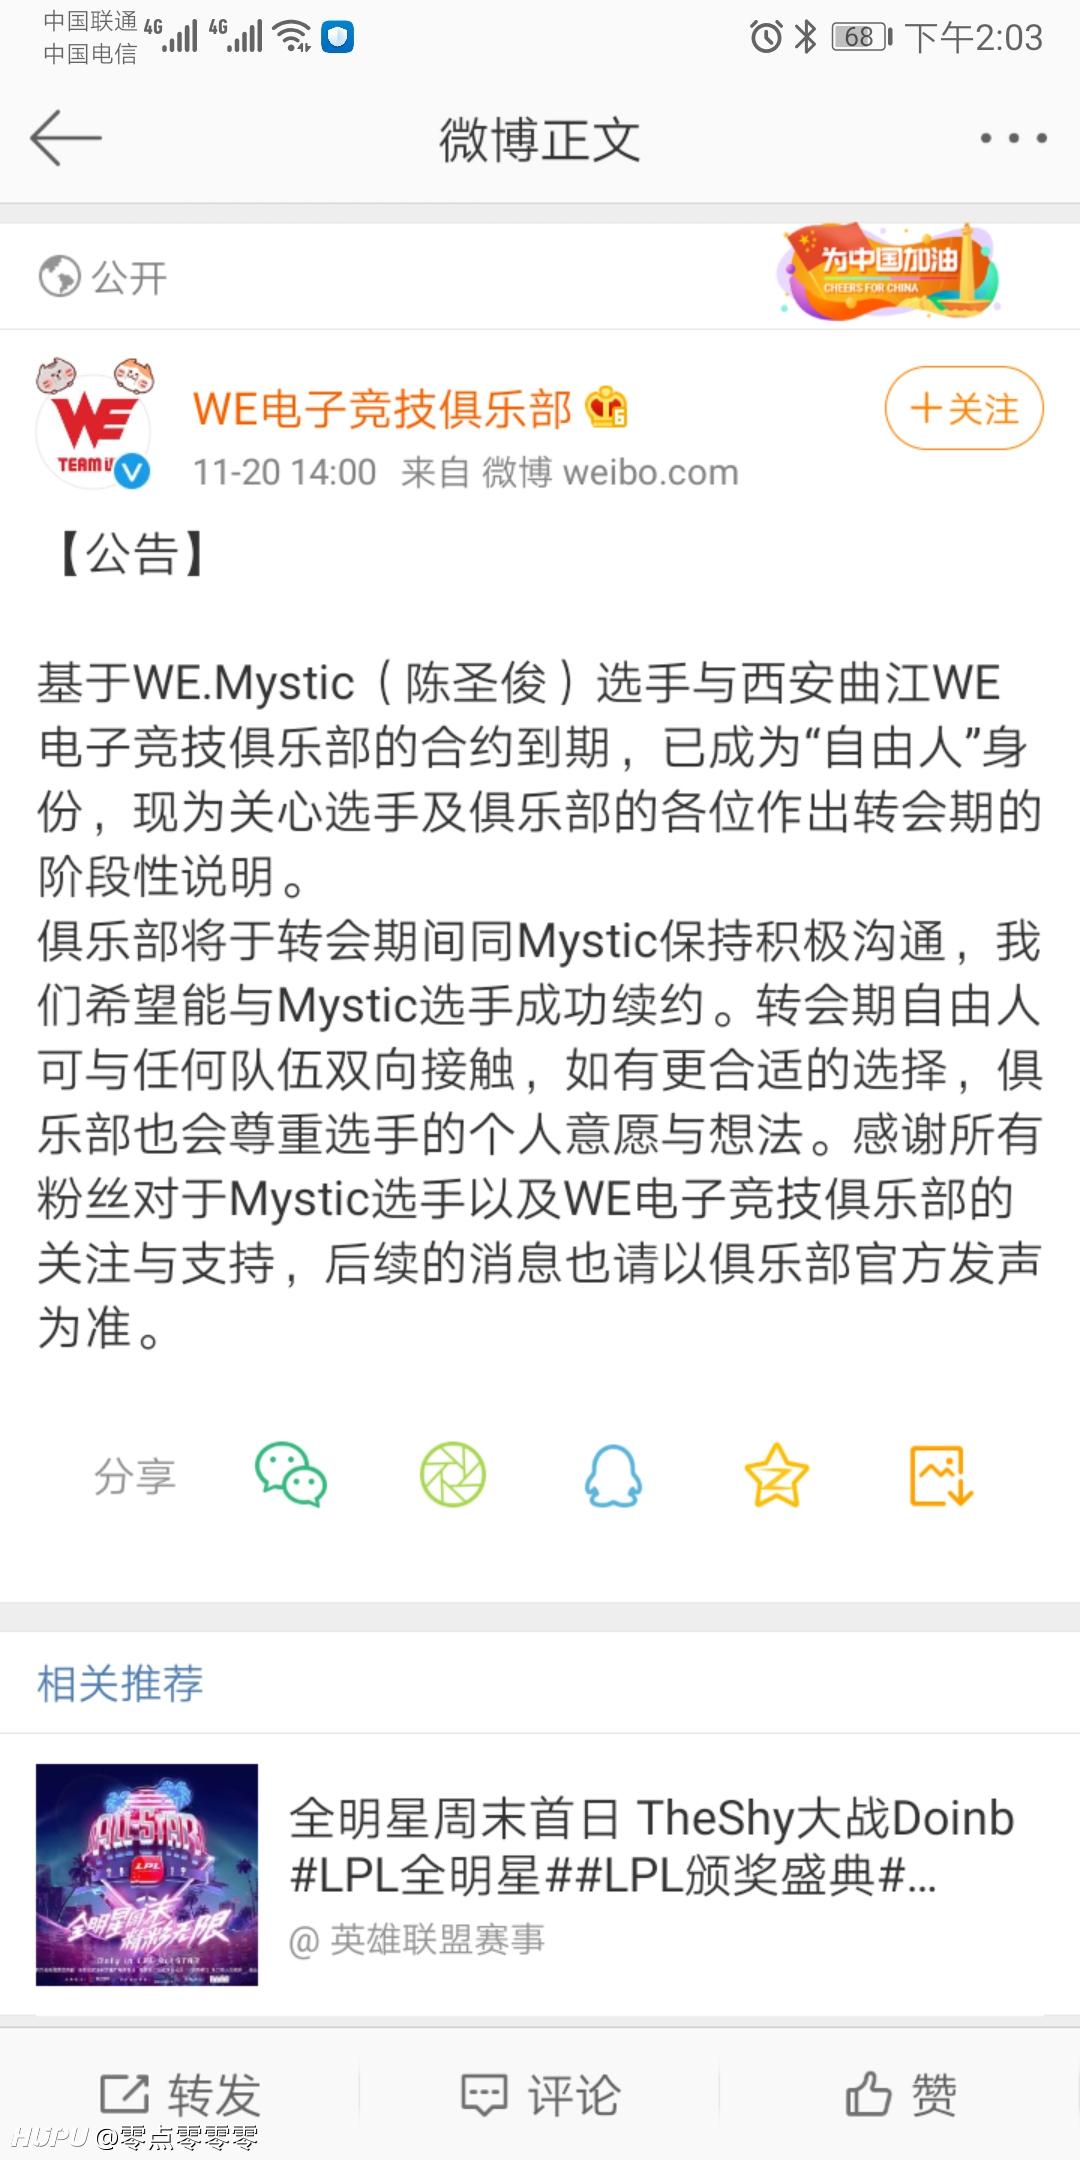 WE官方: Mystic已成自由人, 正与他积极沟通希望续约(1)